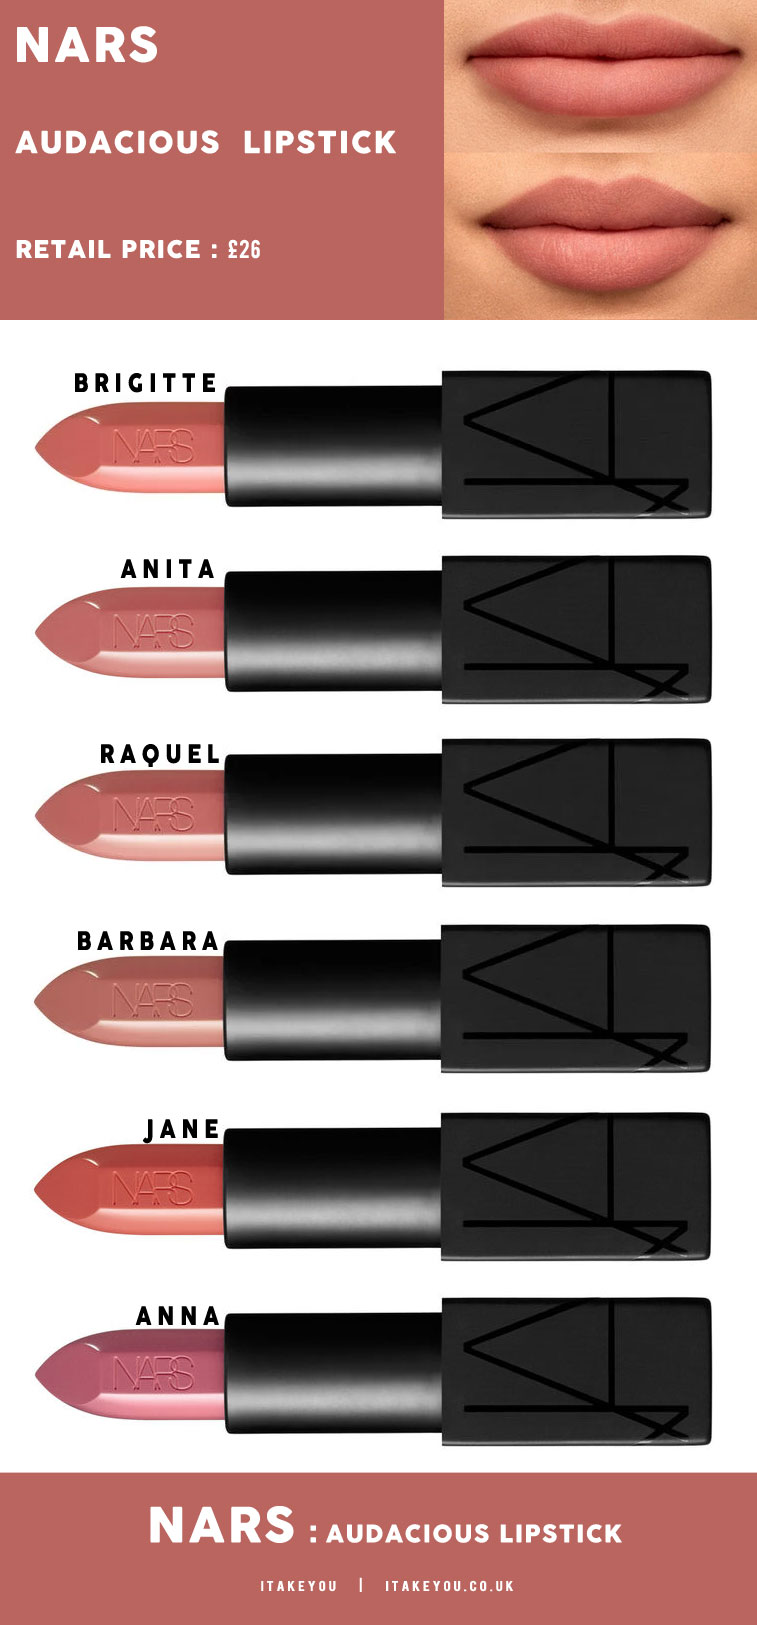 Audacious Lipstick from NARS Cosmetics